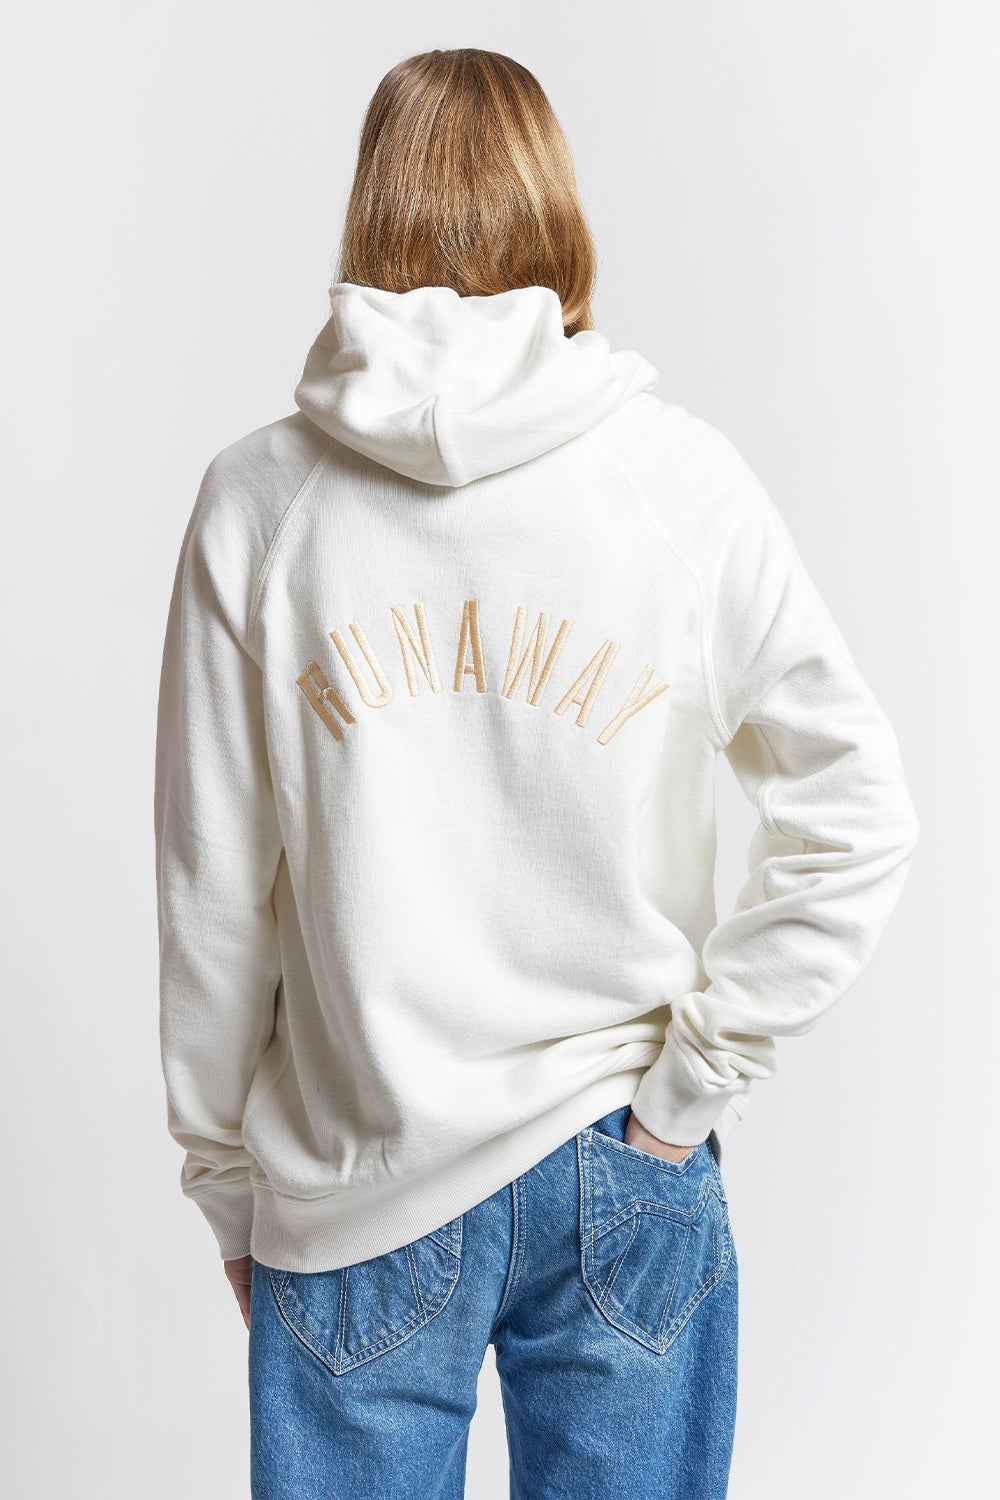 Embroidered Runaway Organic Cotton Hoodie